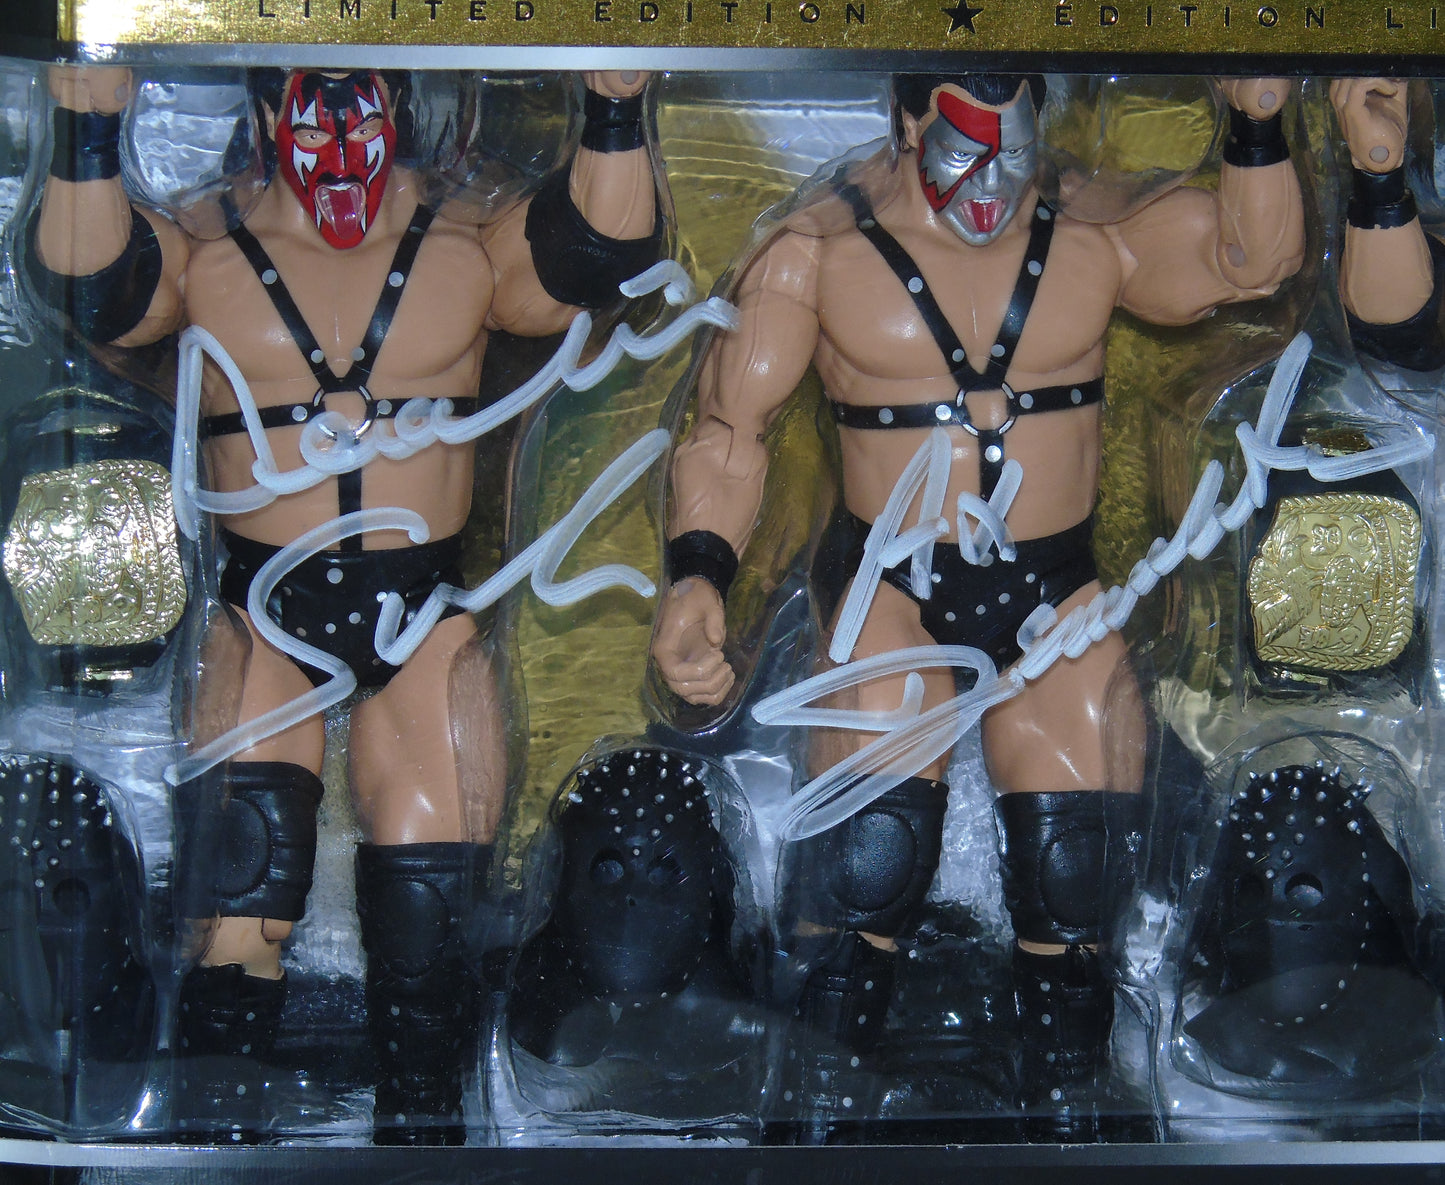 Demolition Ax & Smash WWE/WWF Jakks Classic Signed Triple Figure Set (with Crush)